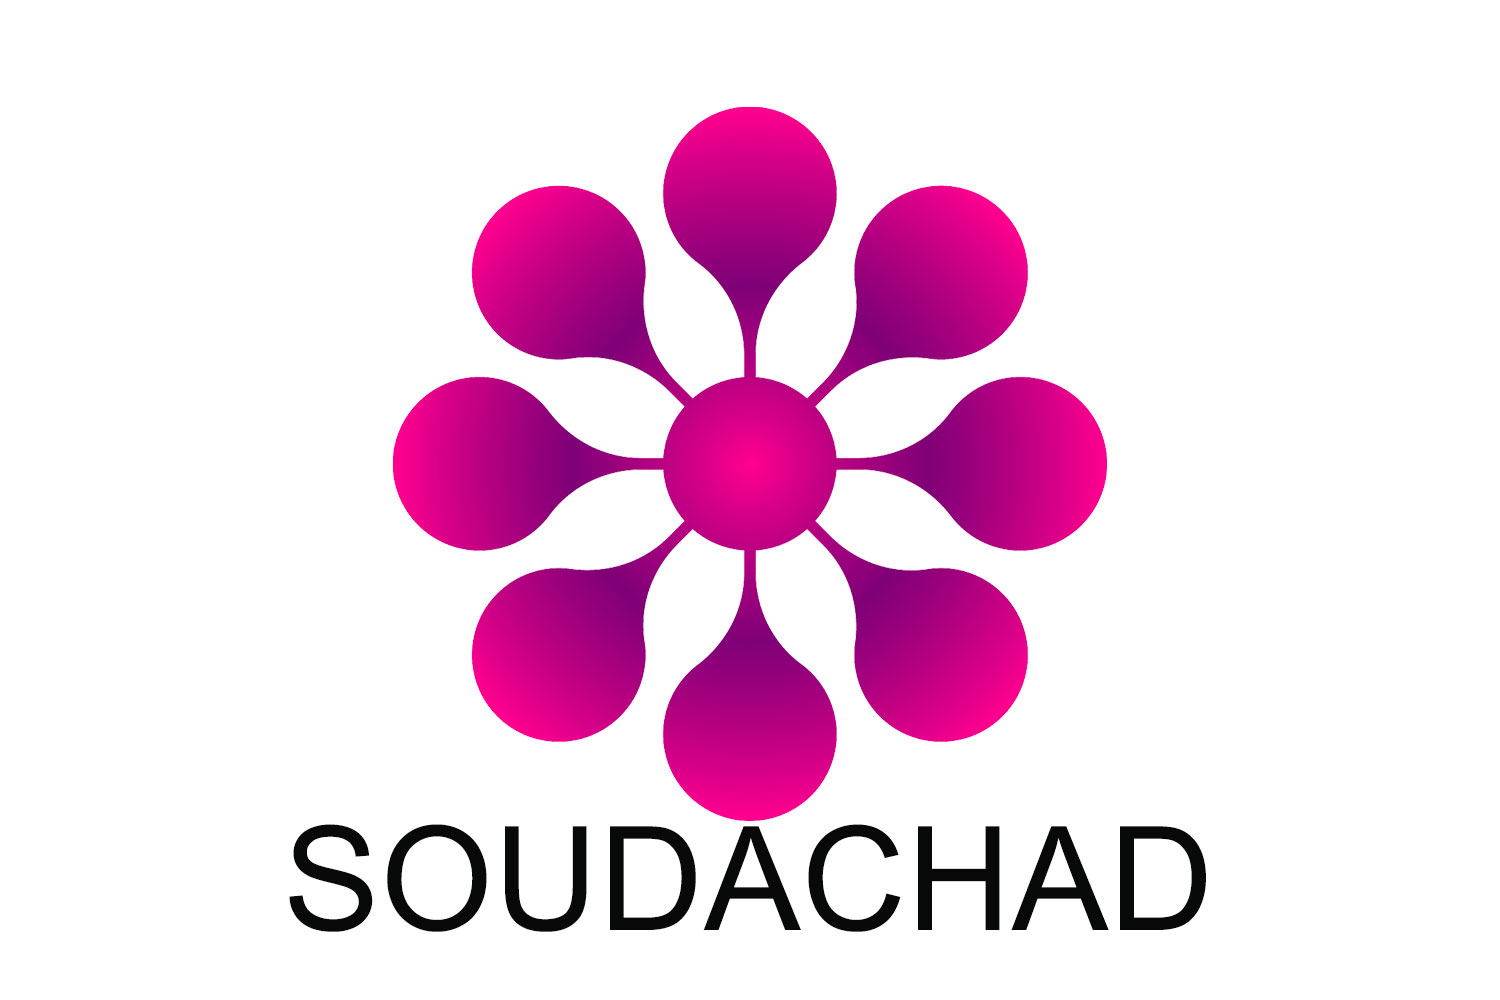 SOUDACHAD